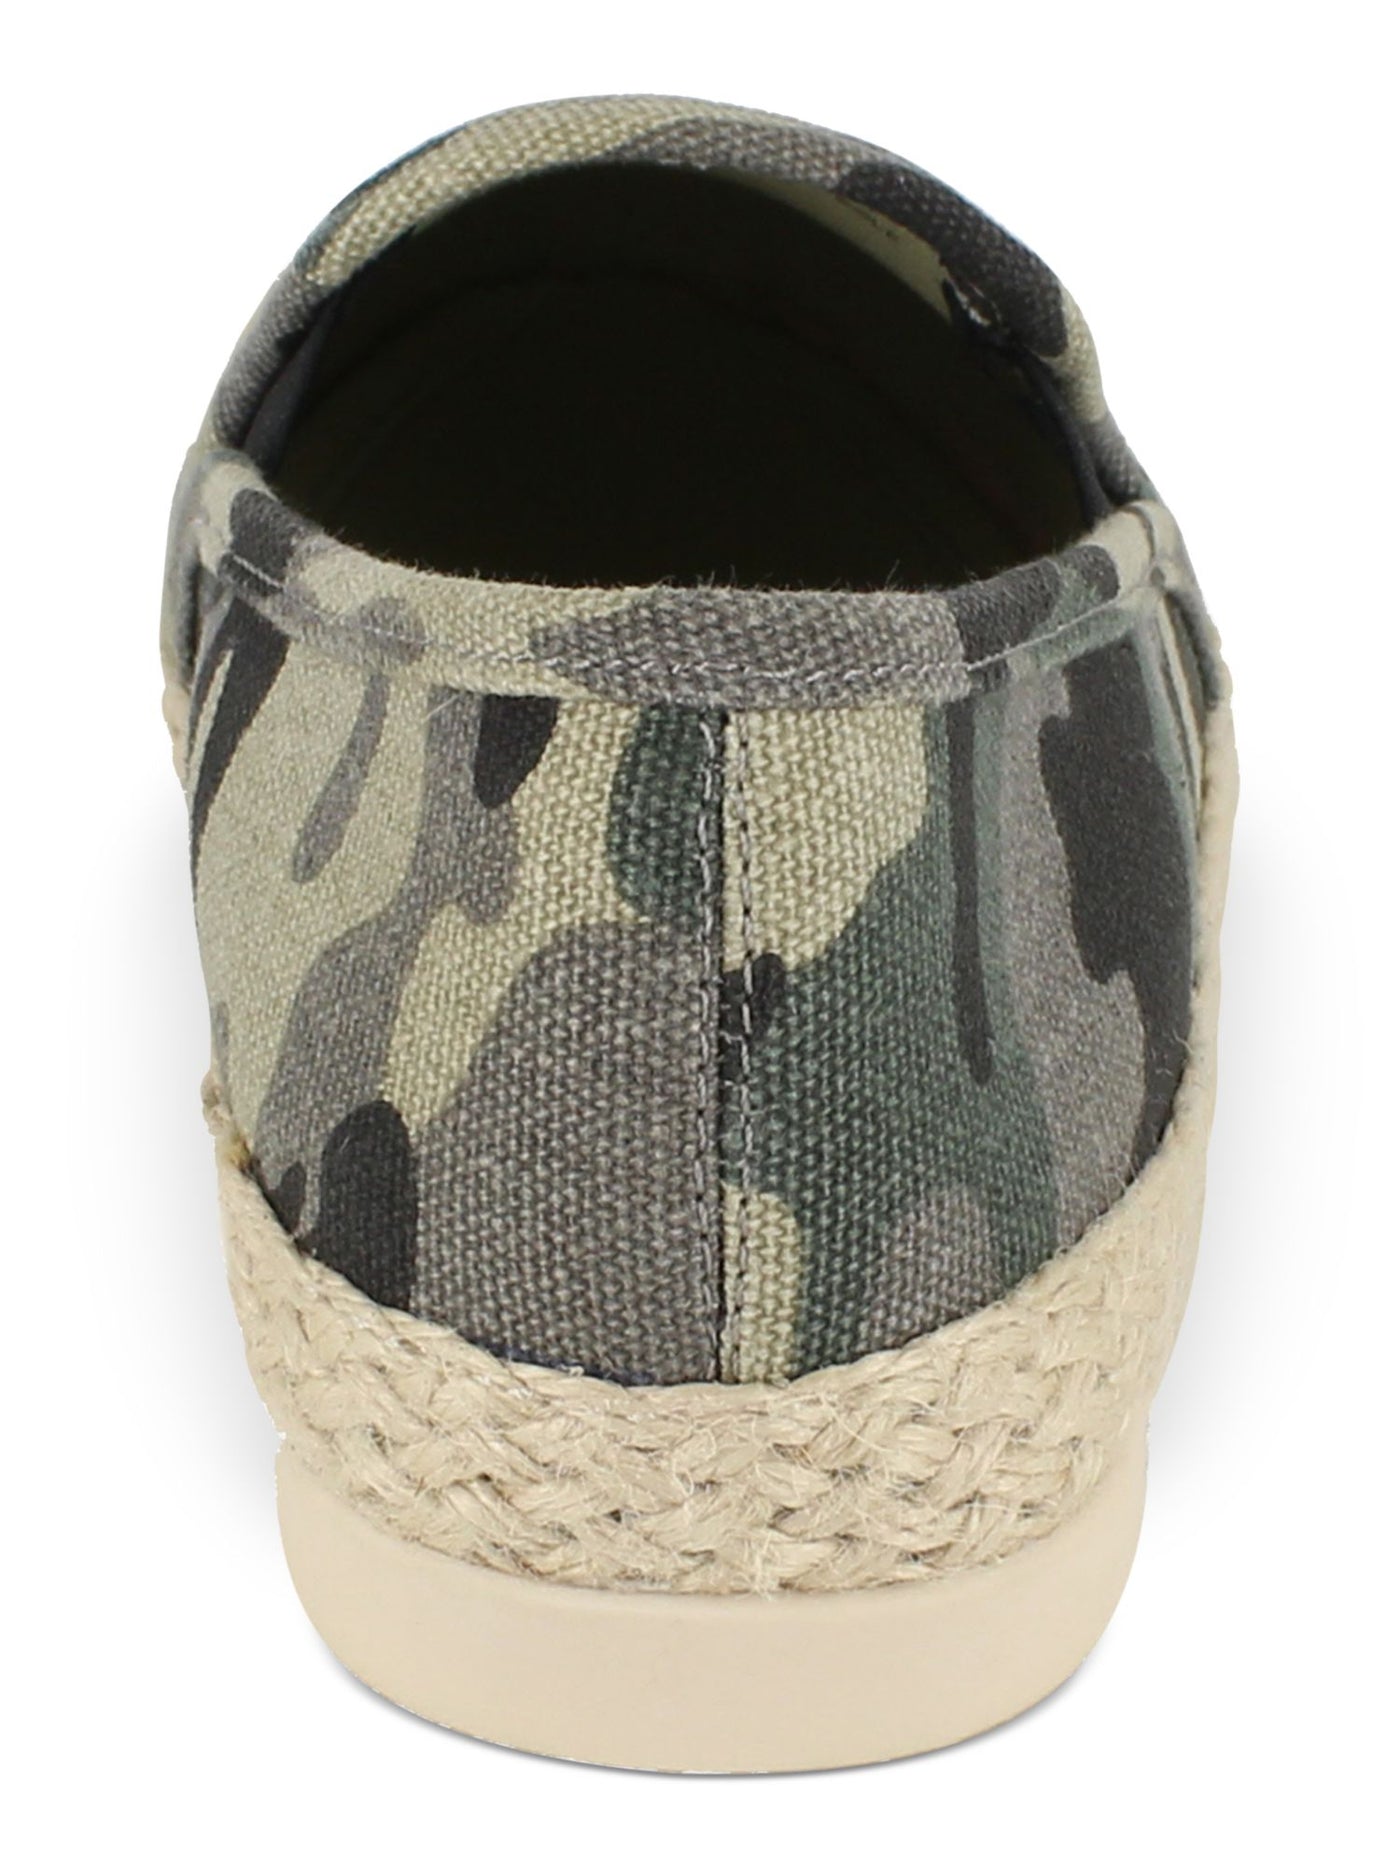 ESPRIT Womens Beige Camouflage 1/2" Espadrille Platform Side Goring Padded Erin Almond Toe Slip On Sneakers Shoes 6 M